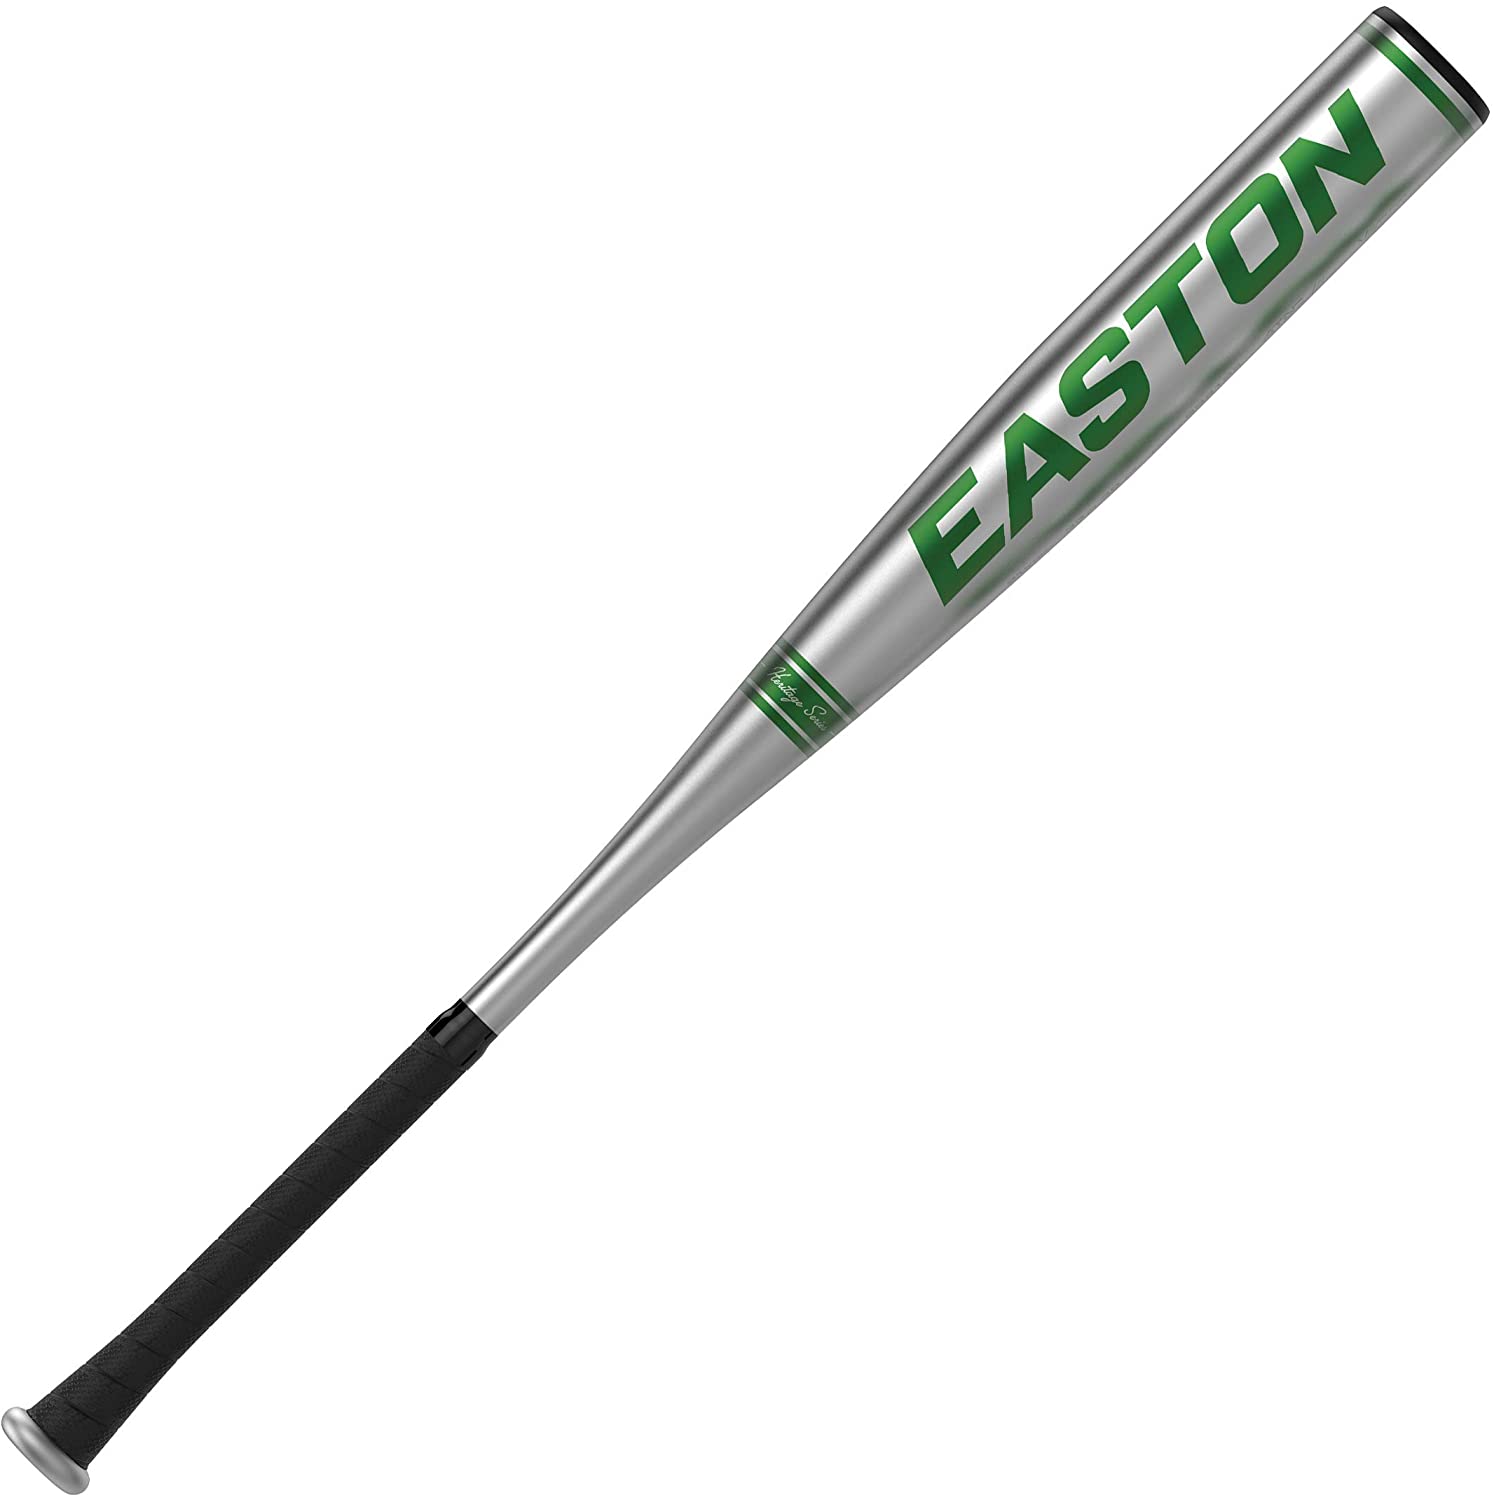 easton-b5-pro-big-barrel-3-bbcor-baseball-bat-32-inch-29-oz BB21B5-3229 Easton  THE GREEN EASTON IS BACK! First introduced in 1978 the original